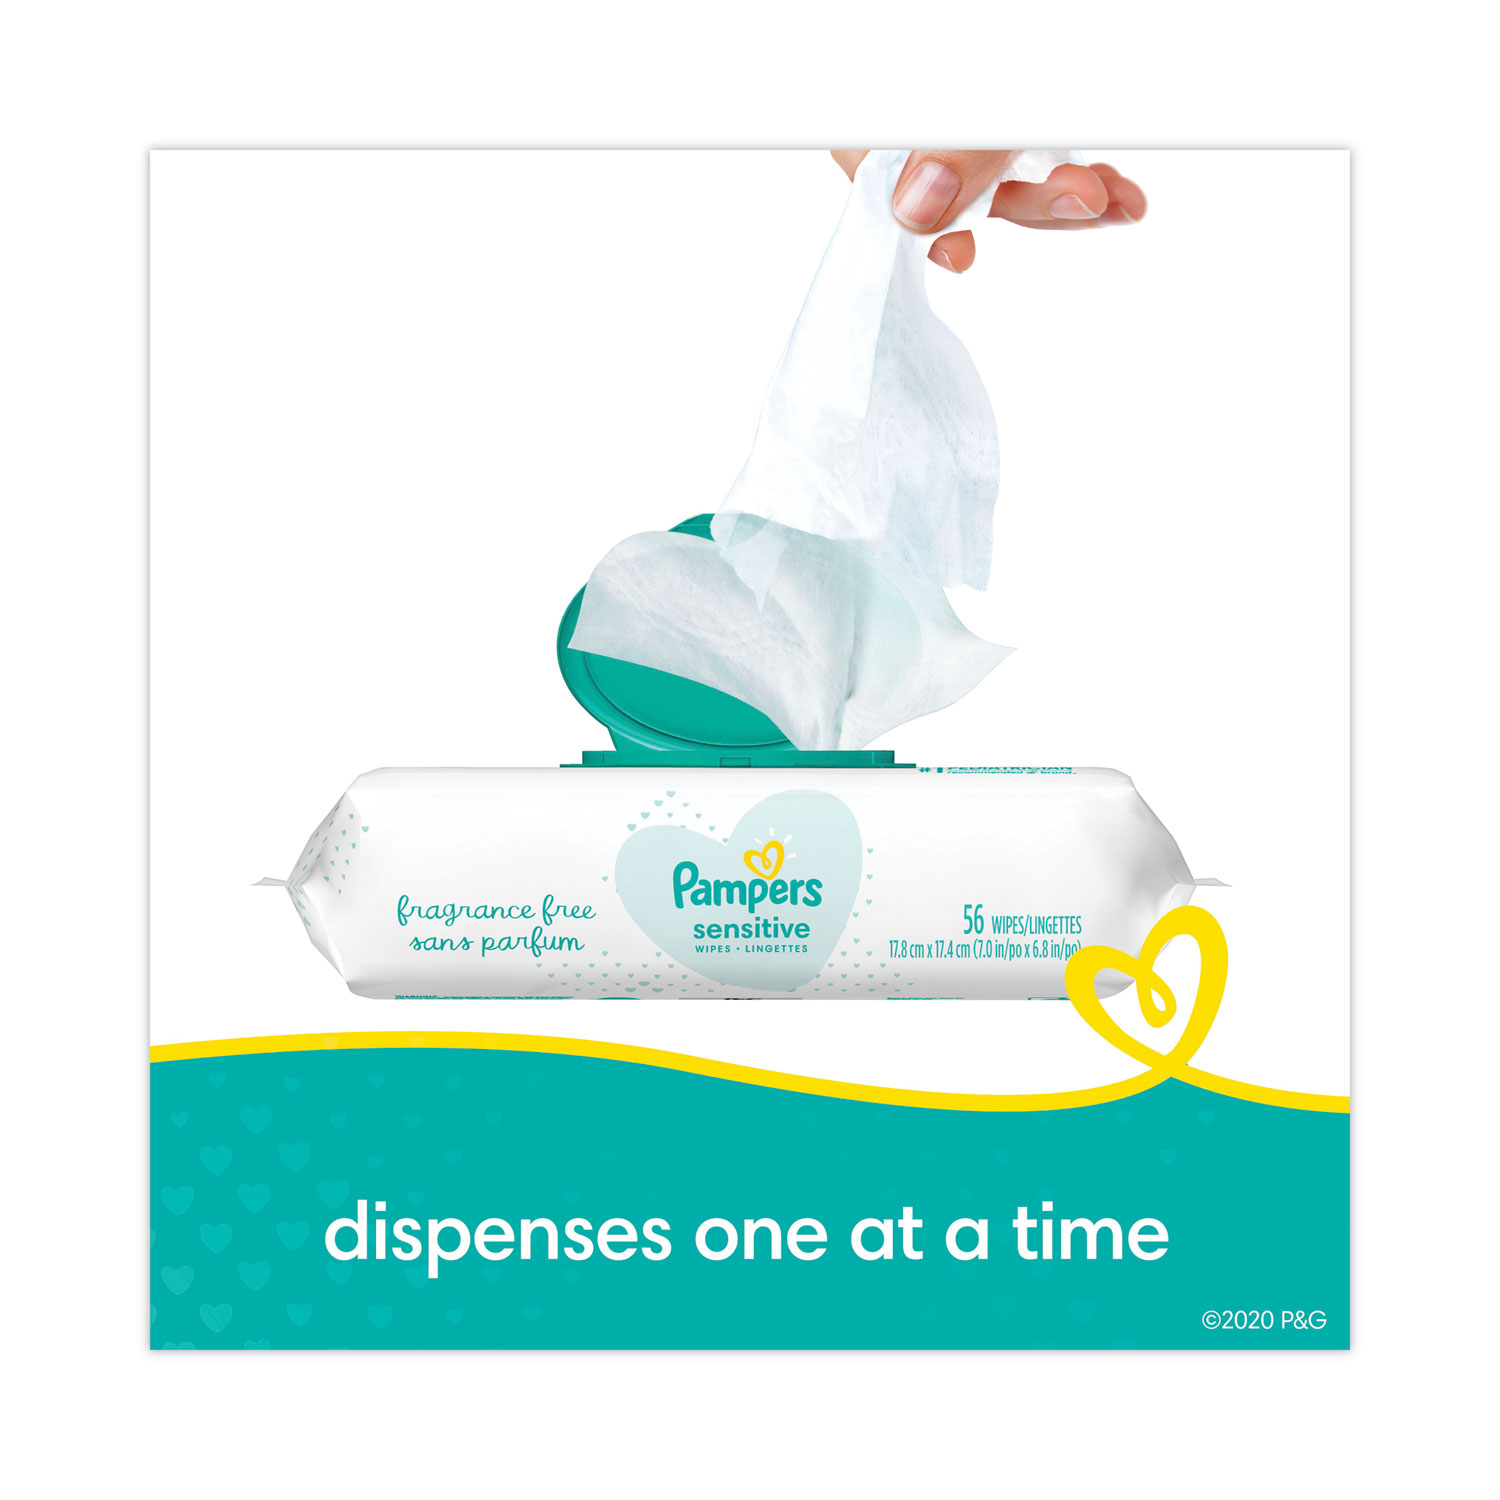 Pampers Baby Wipes Sensitive Fragrance Free Pop-Top Packs, 16 pk.